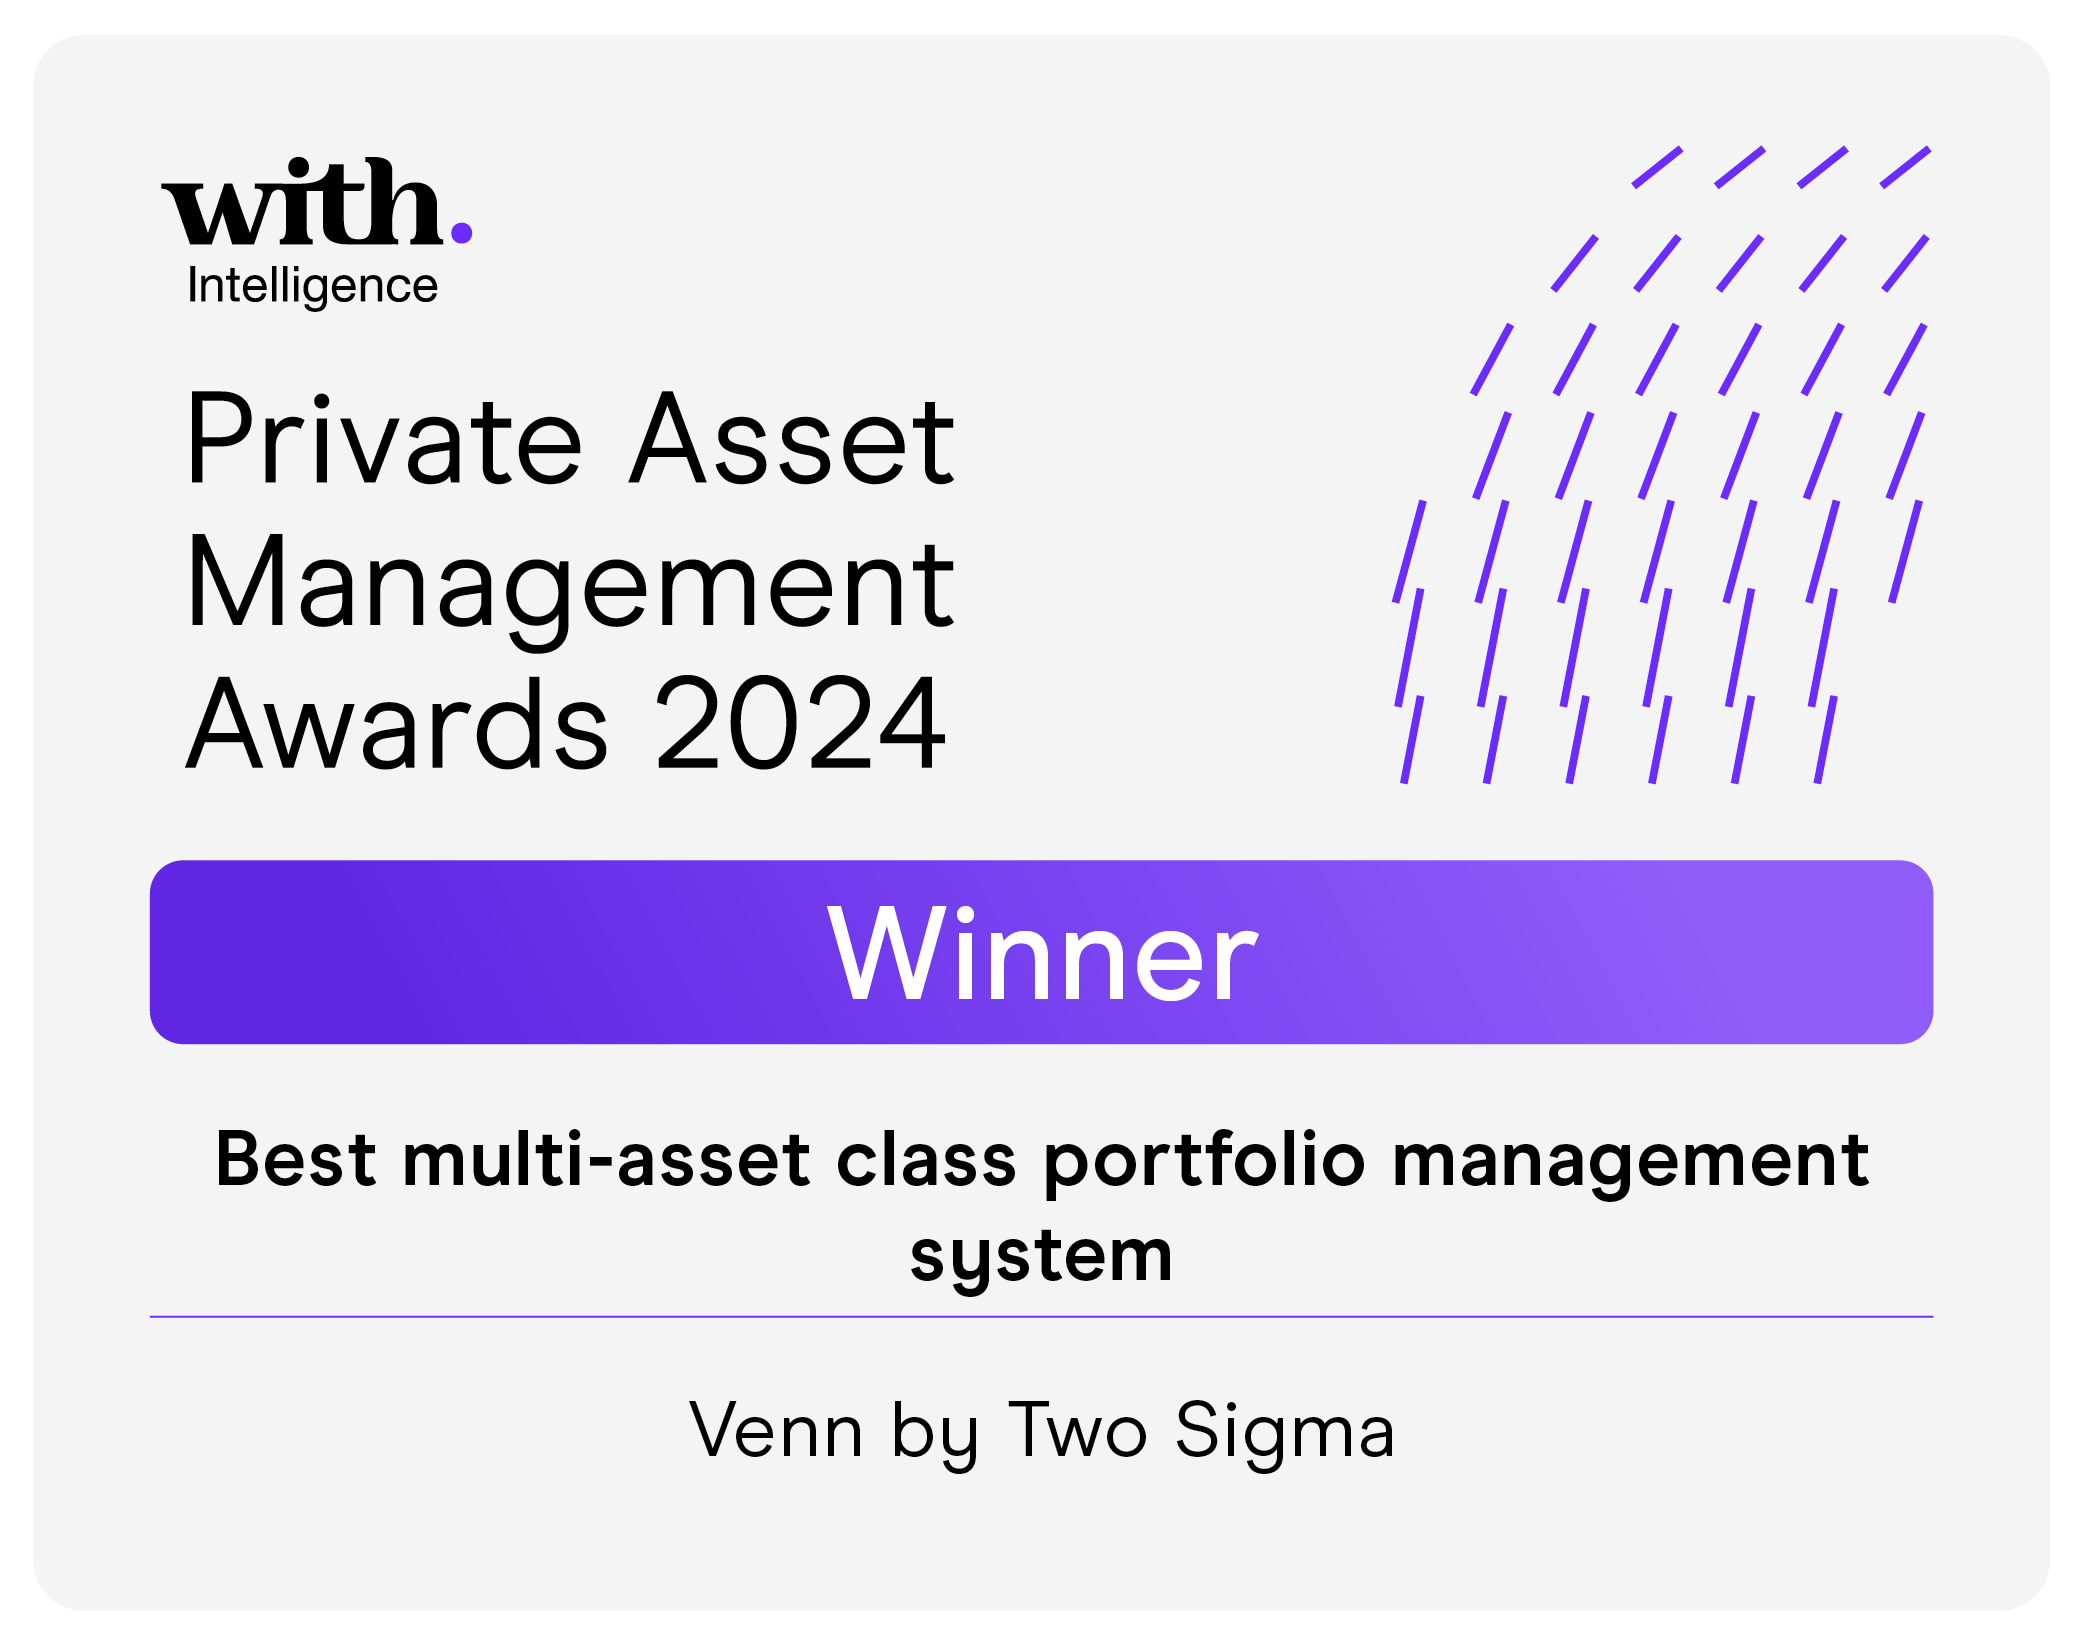 PAM Awards 2024 Best multi-asset class portfolio management system 